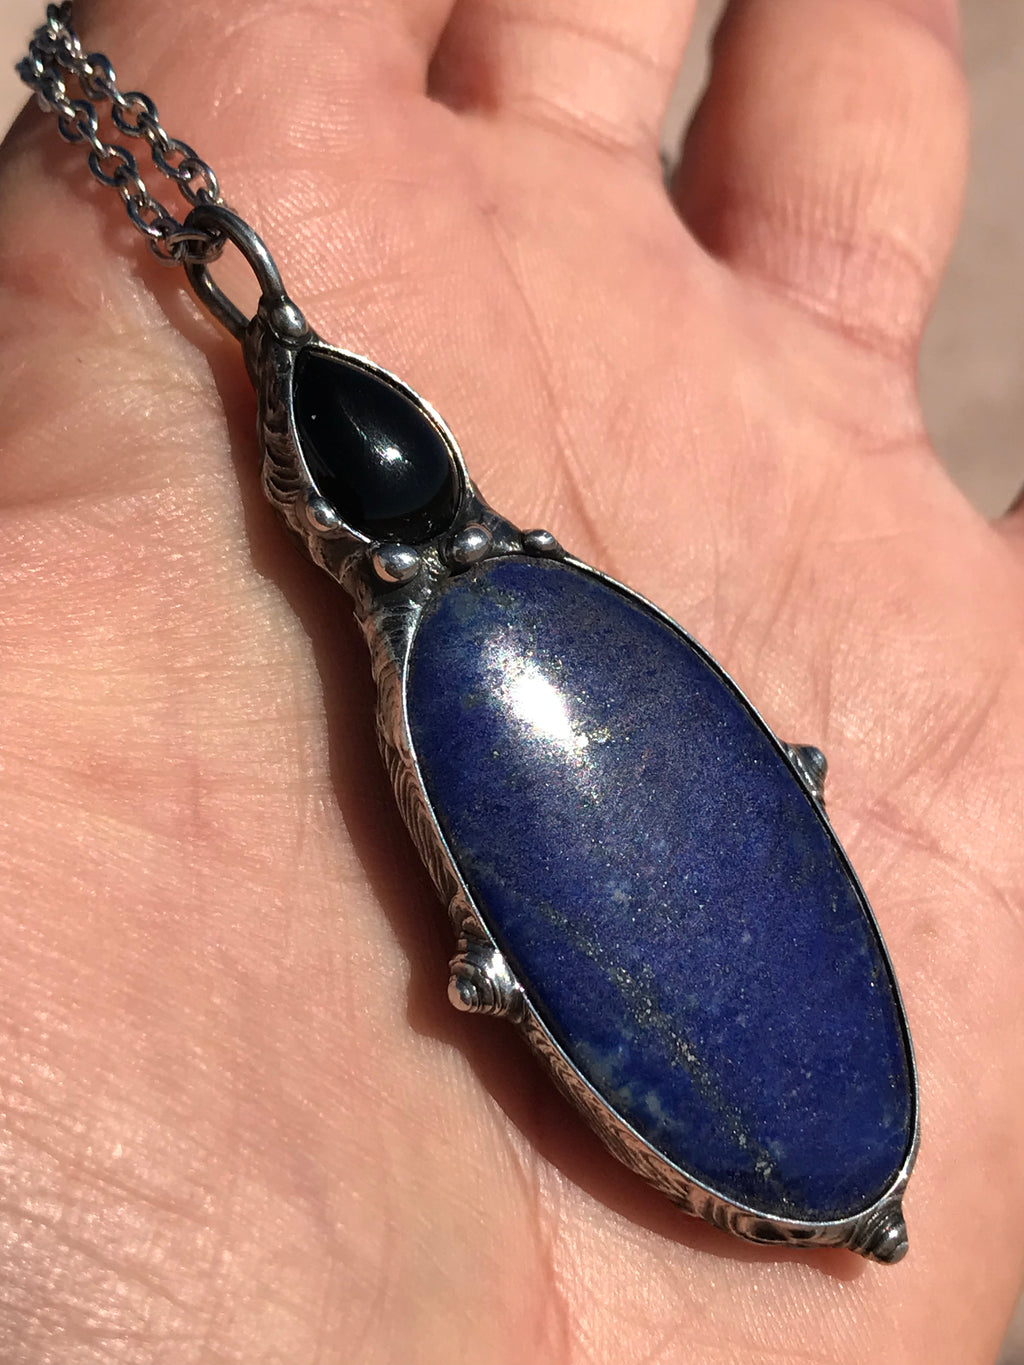 Lapis Lazuli goddess pendant